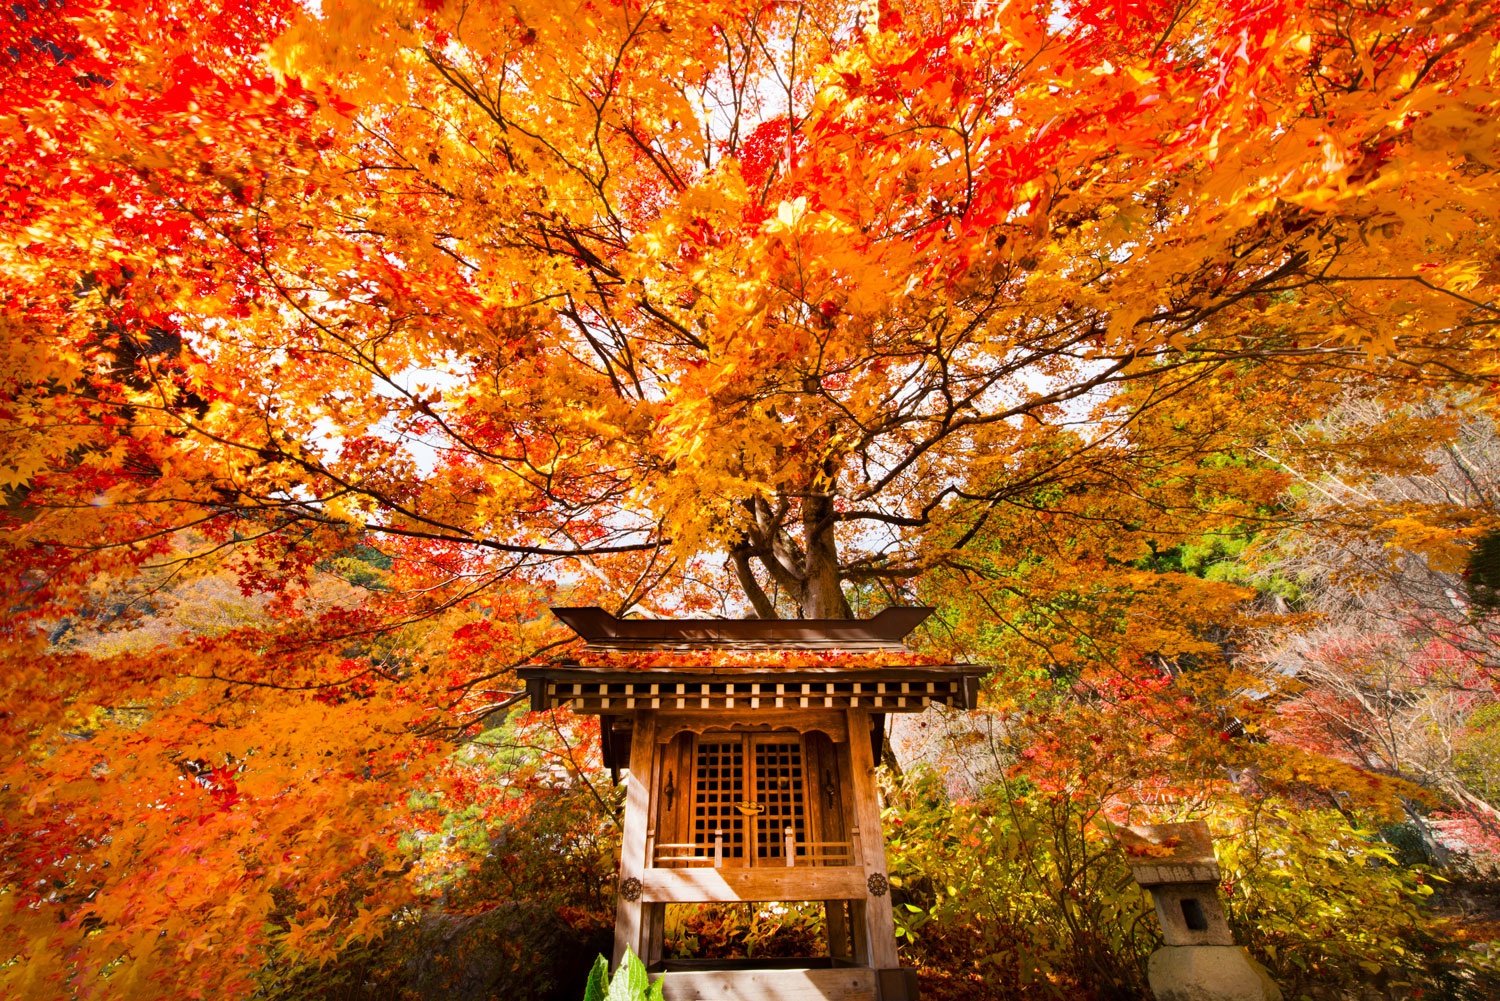 Autumn Leaves Viewing Japan Photo Tour - Blain Harasymiw Photography